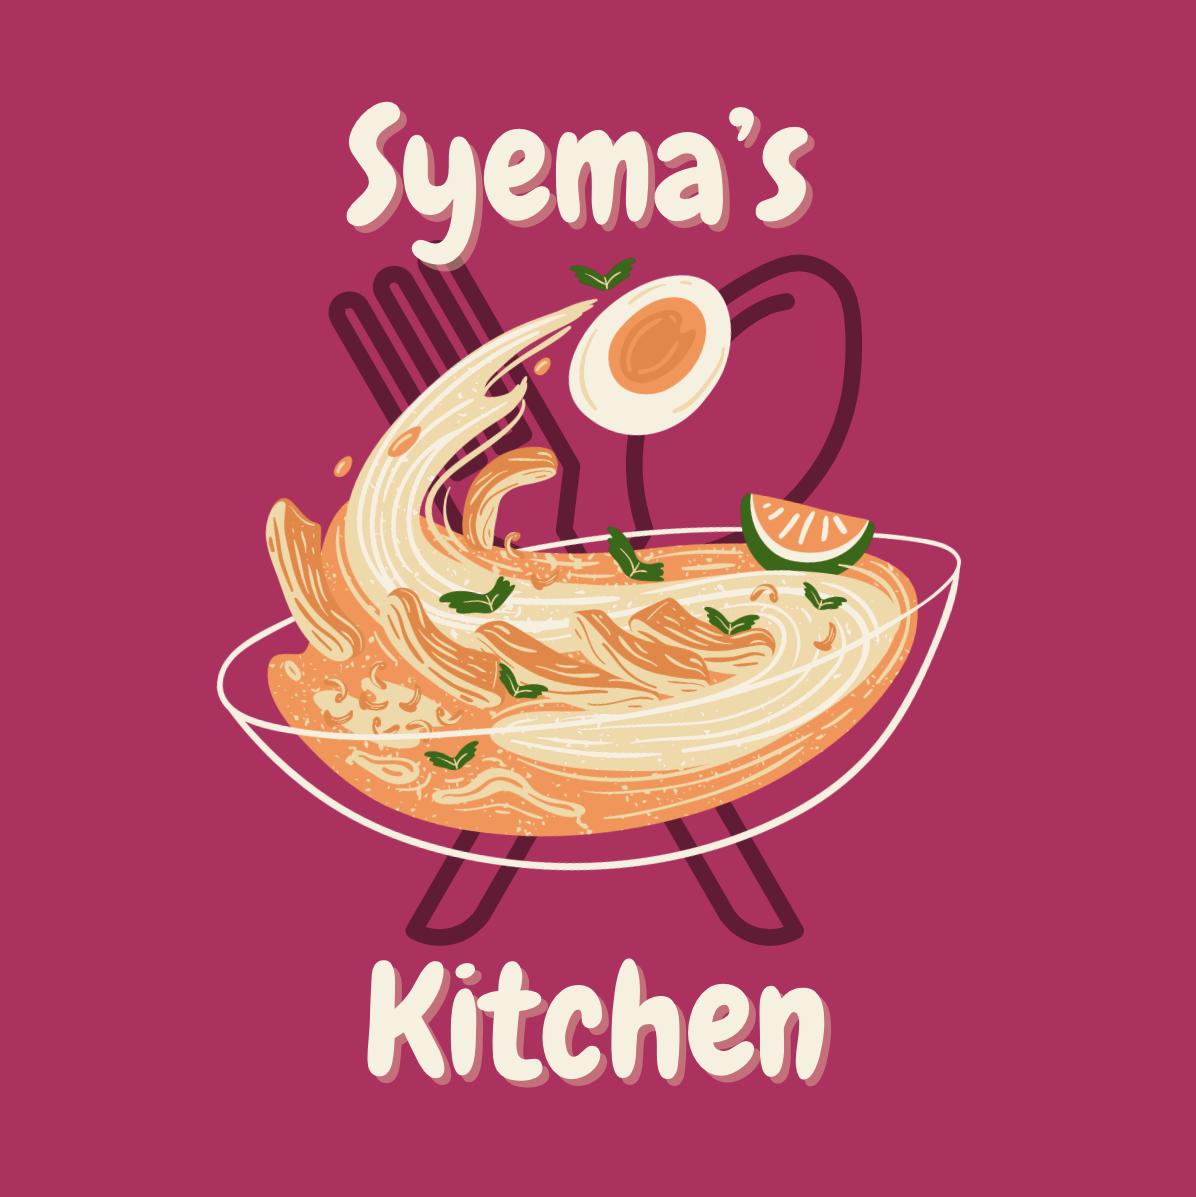 Syema’s Kitchen